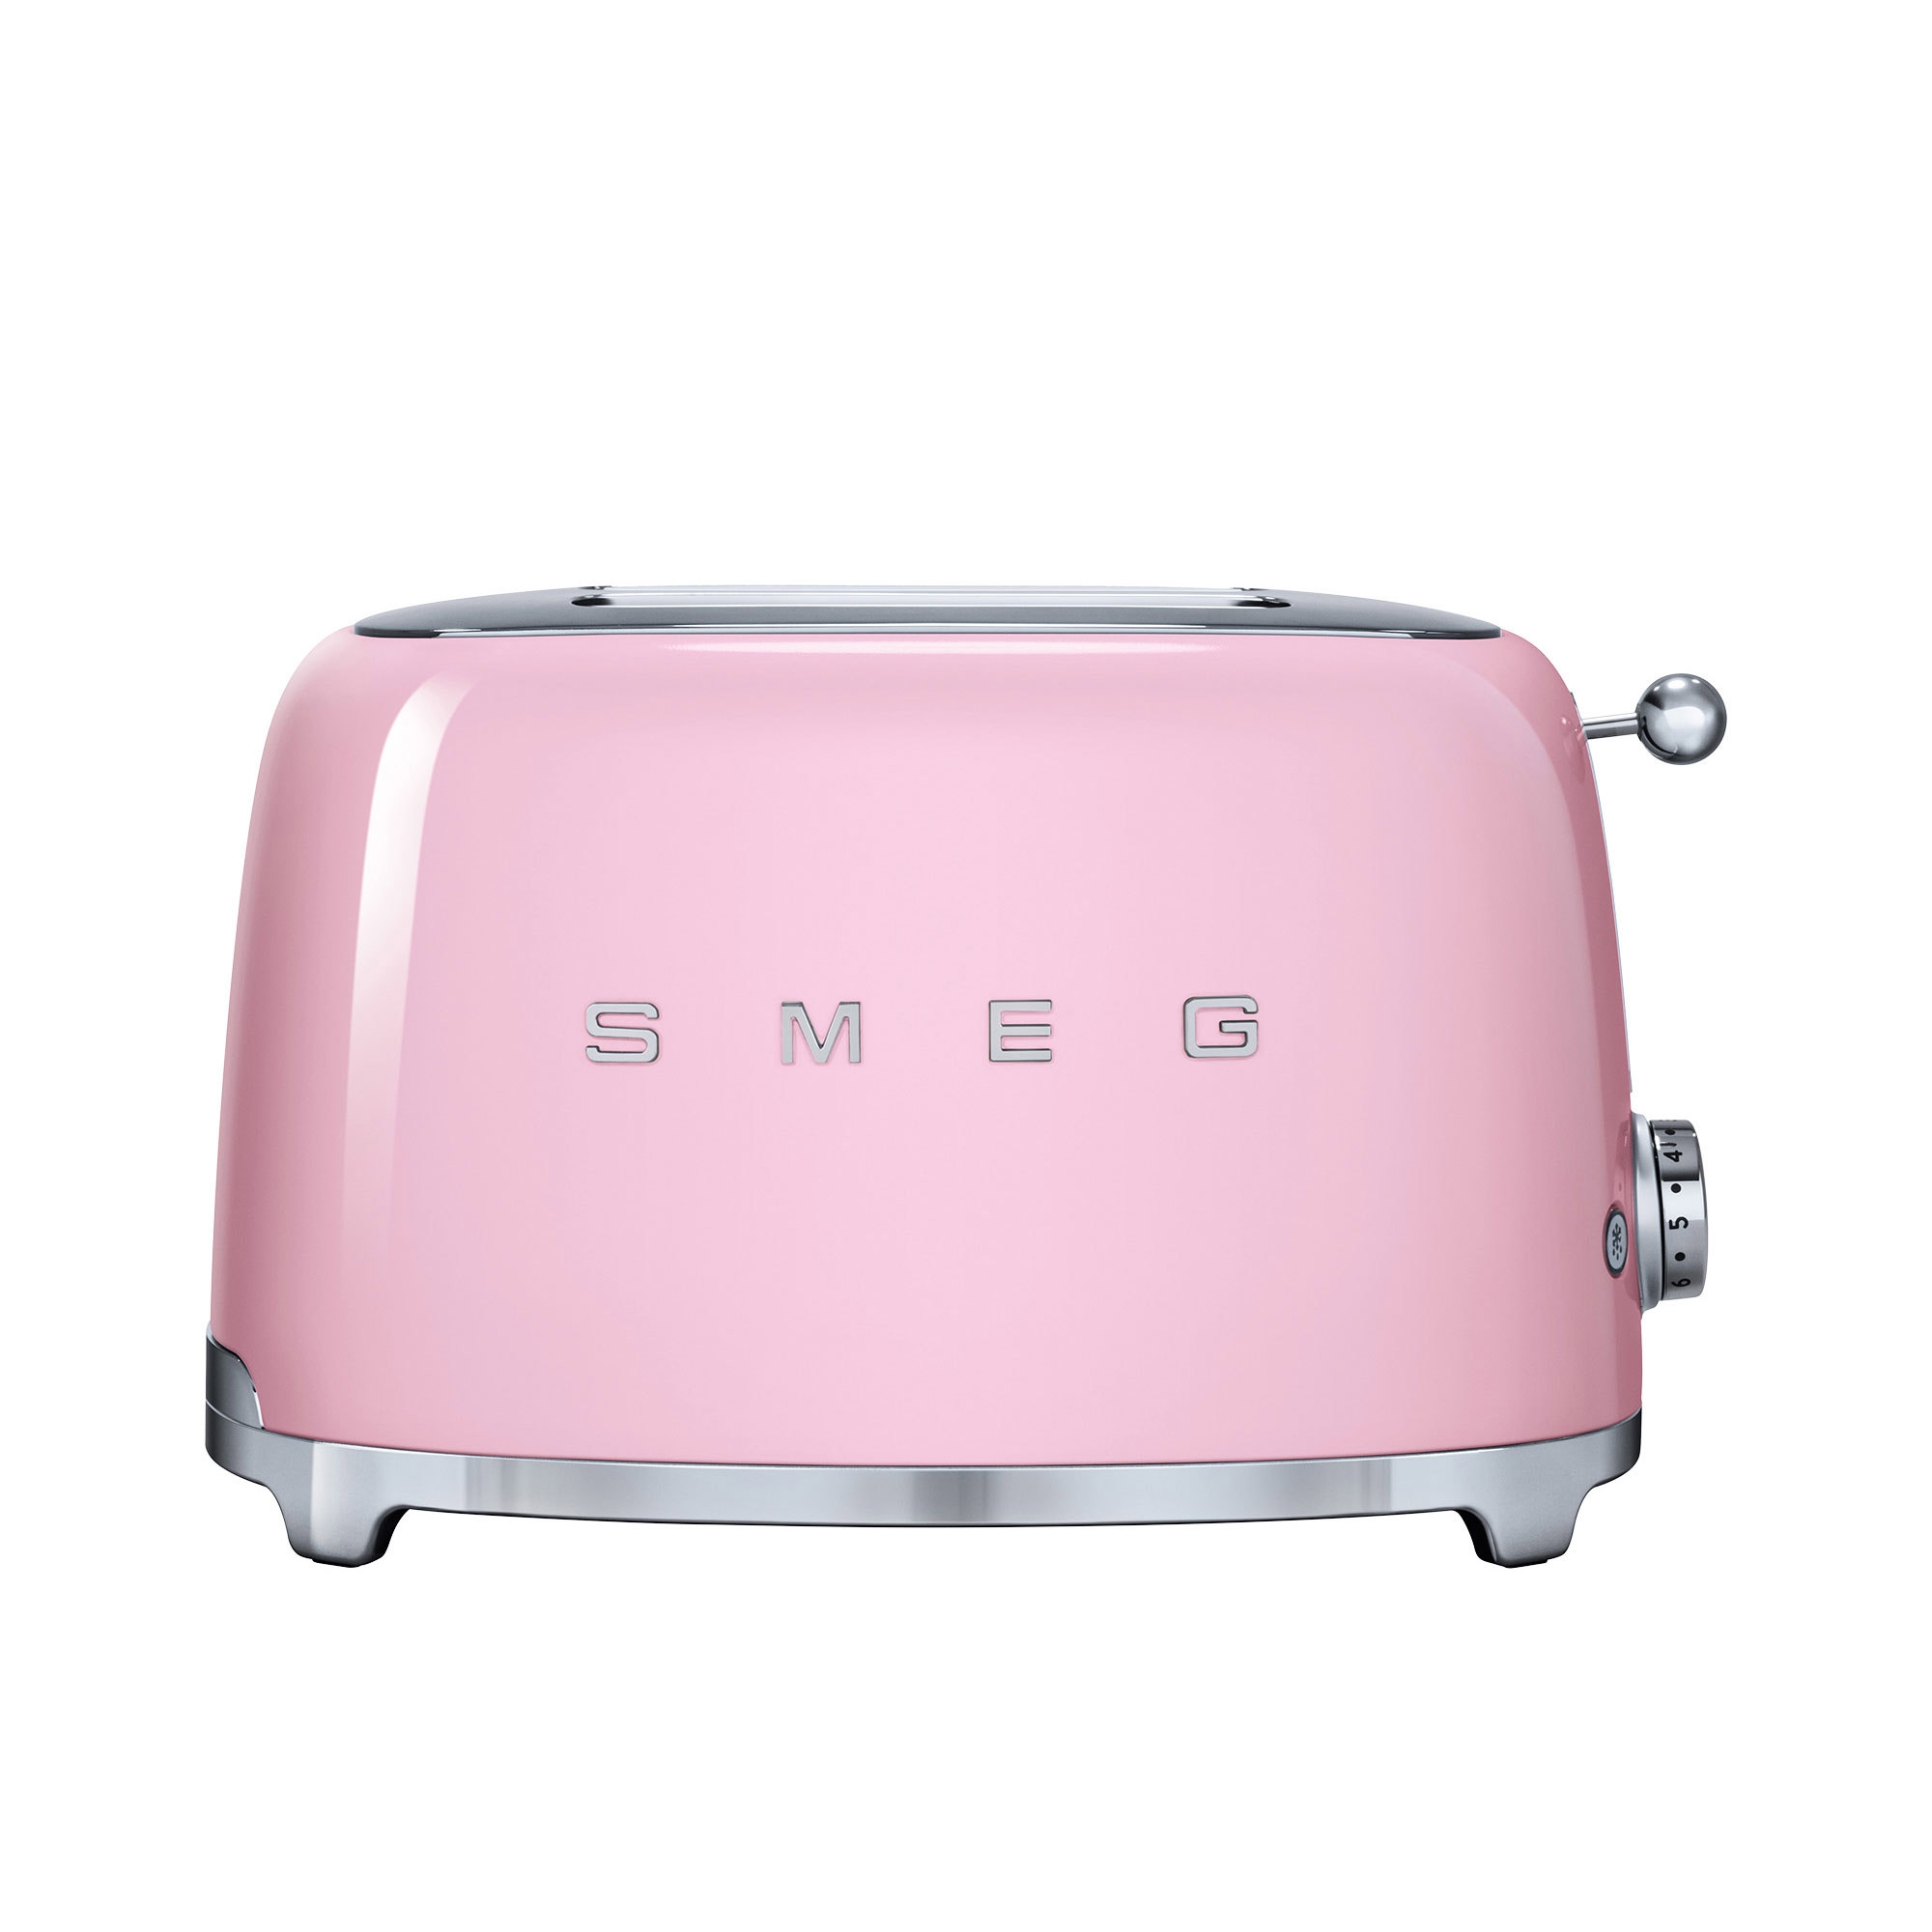 Smeg 50's Retro Style 2 Slice Toaster Pastel Pink Image 2